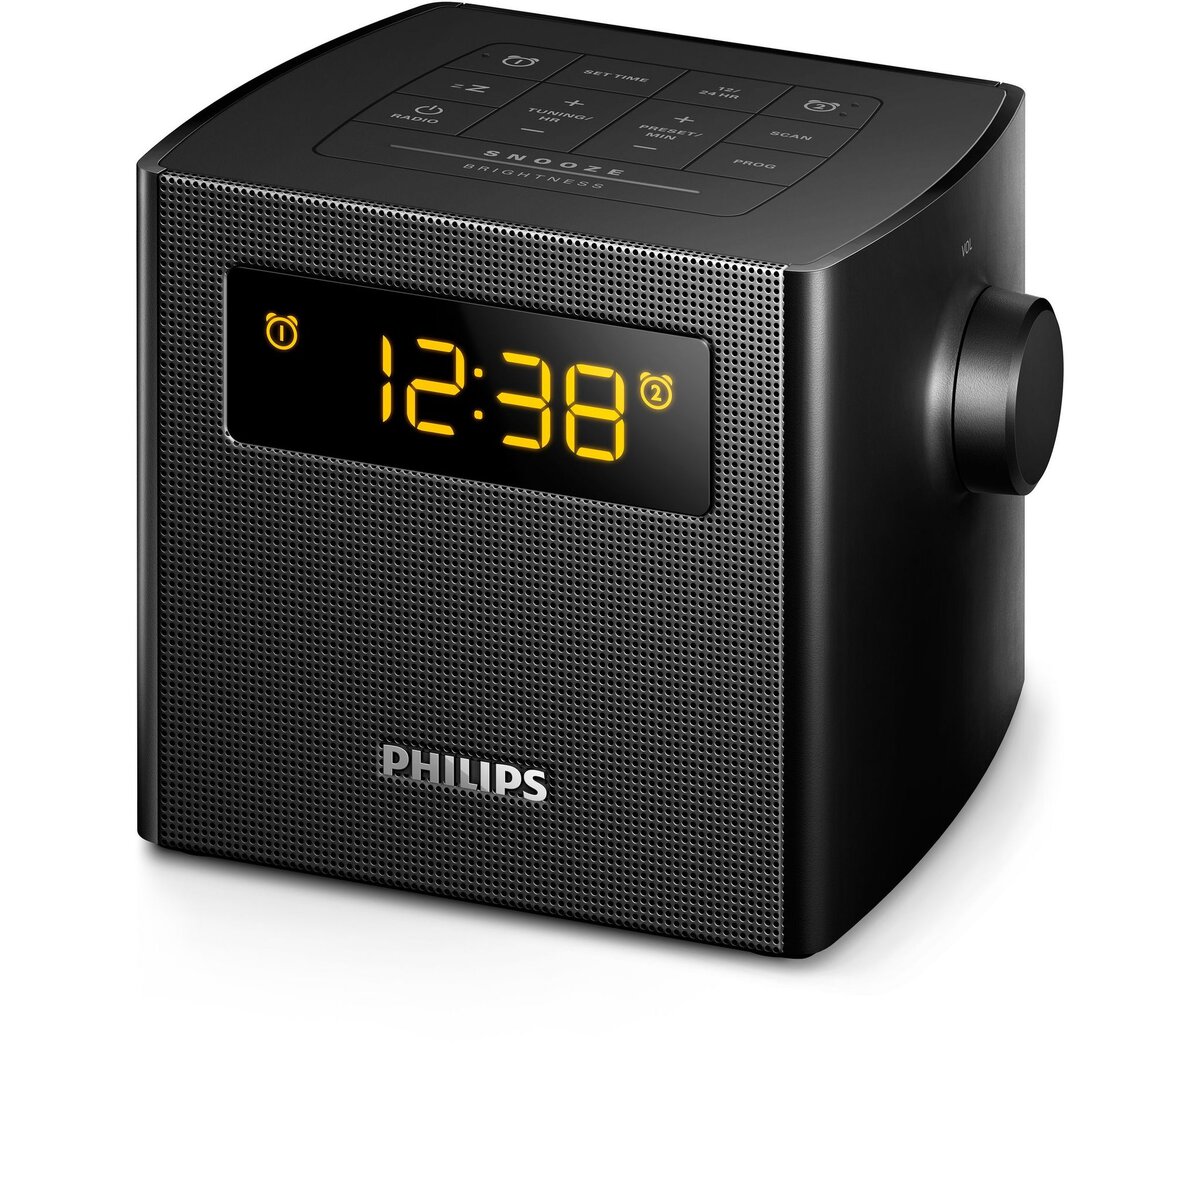 PHILIPS AJ4300B - Noir - Radio-réveil